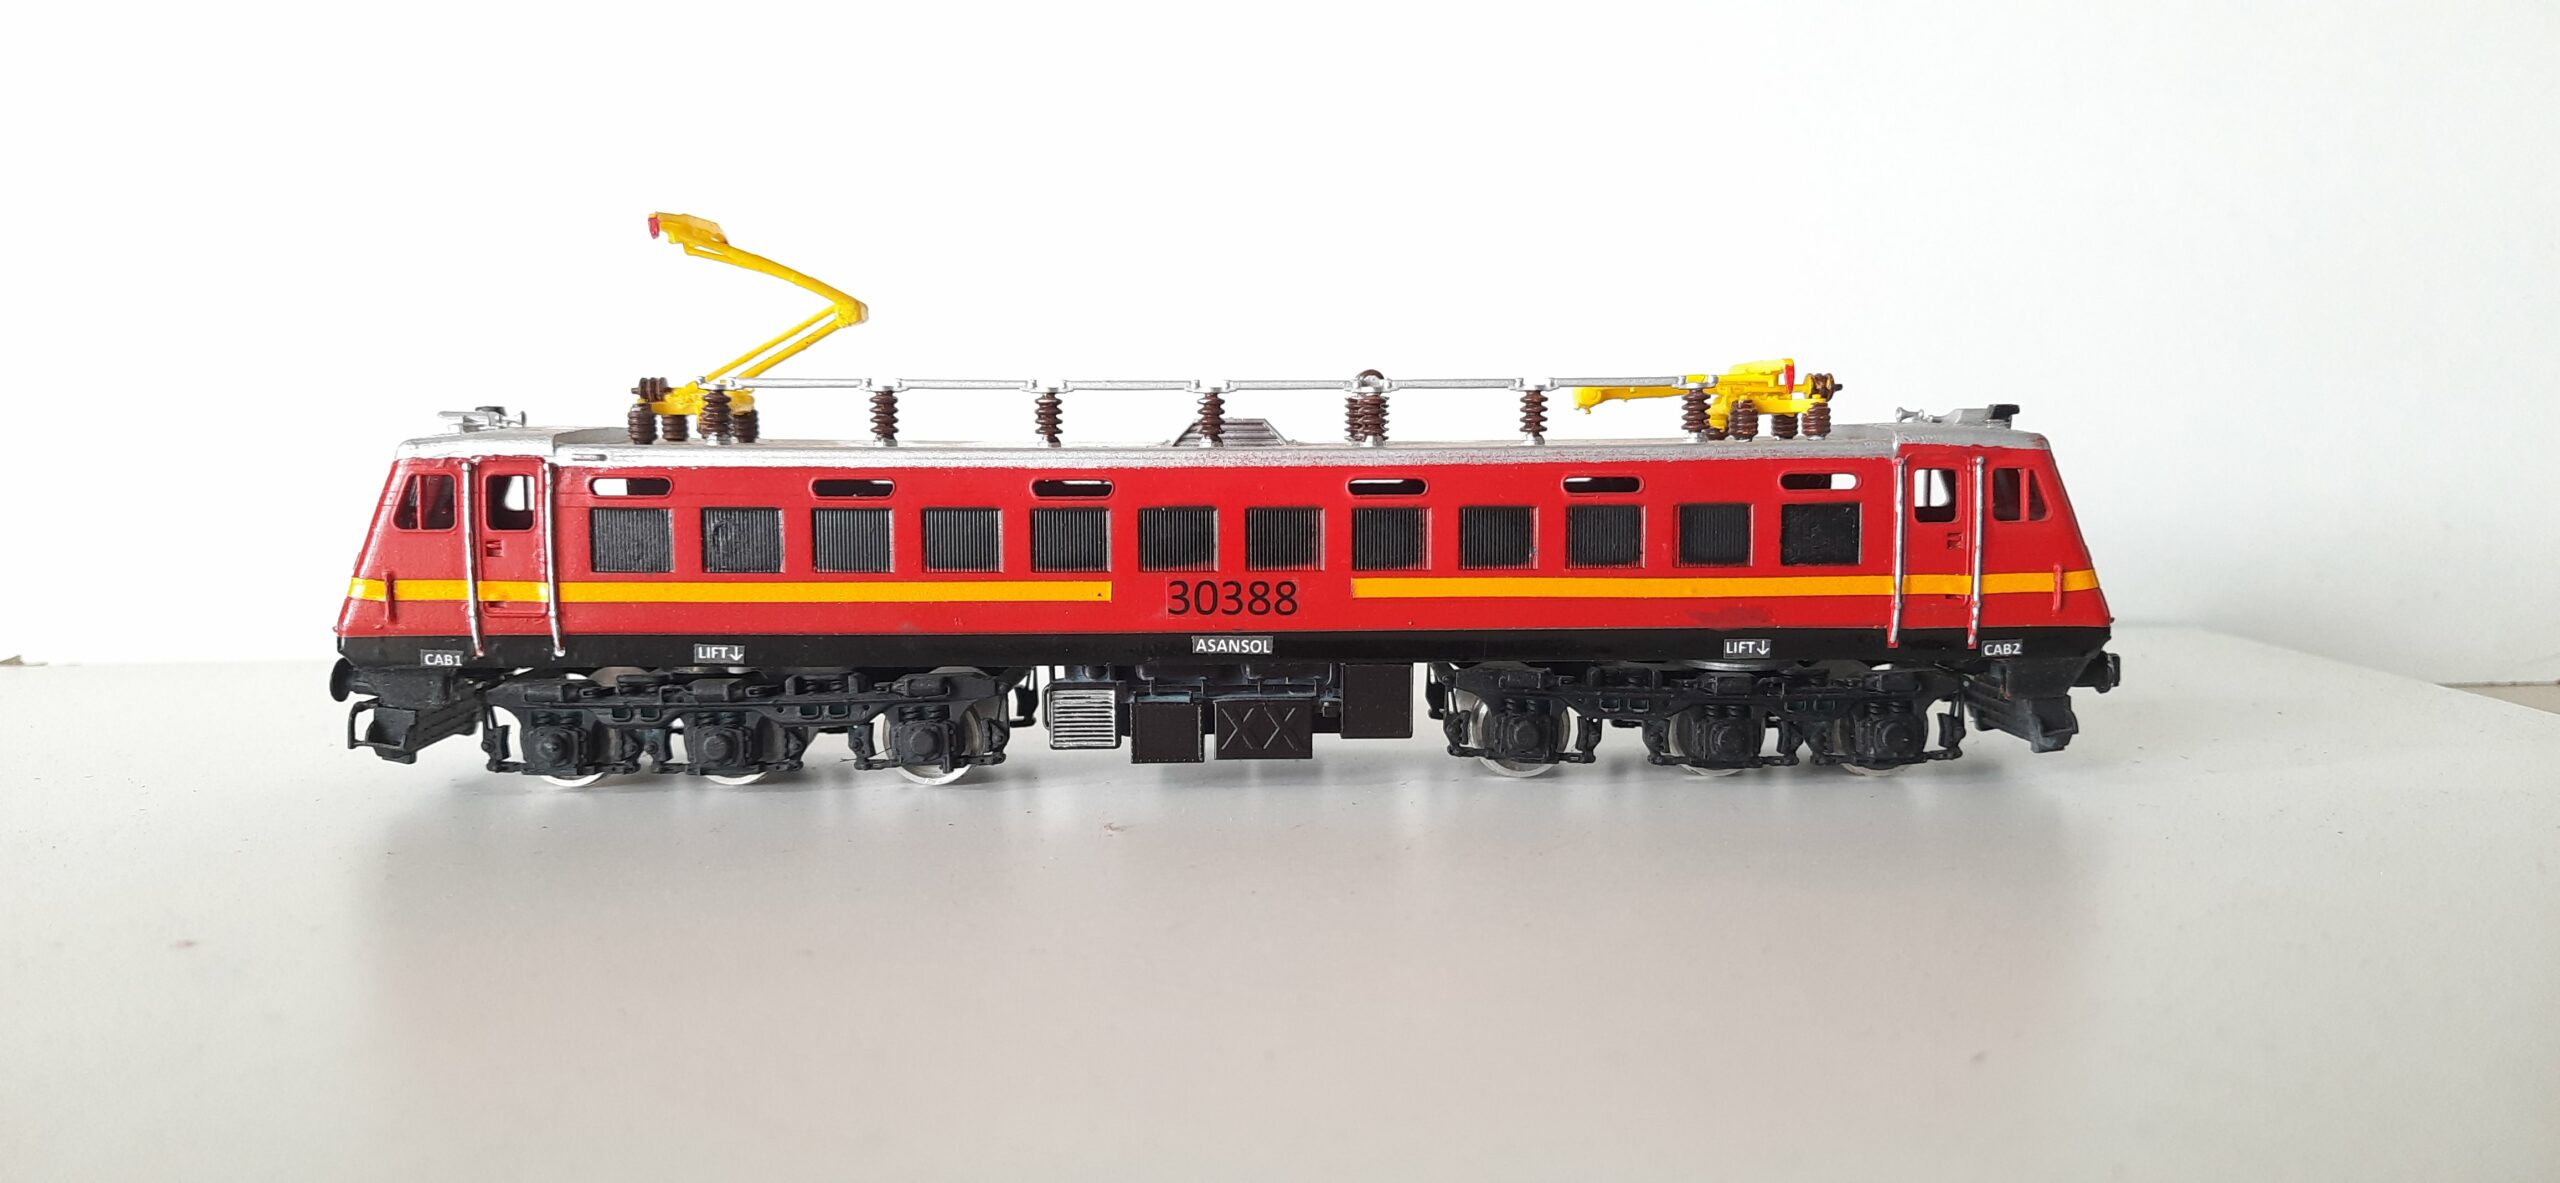 model train engines